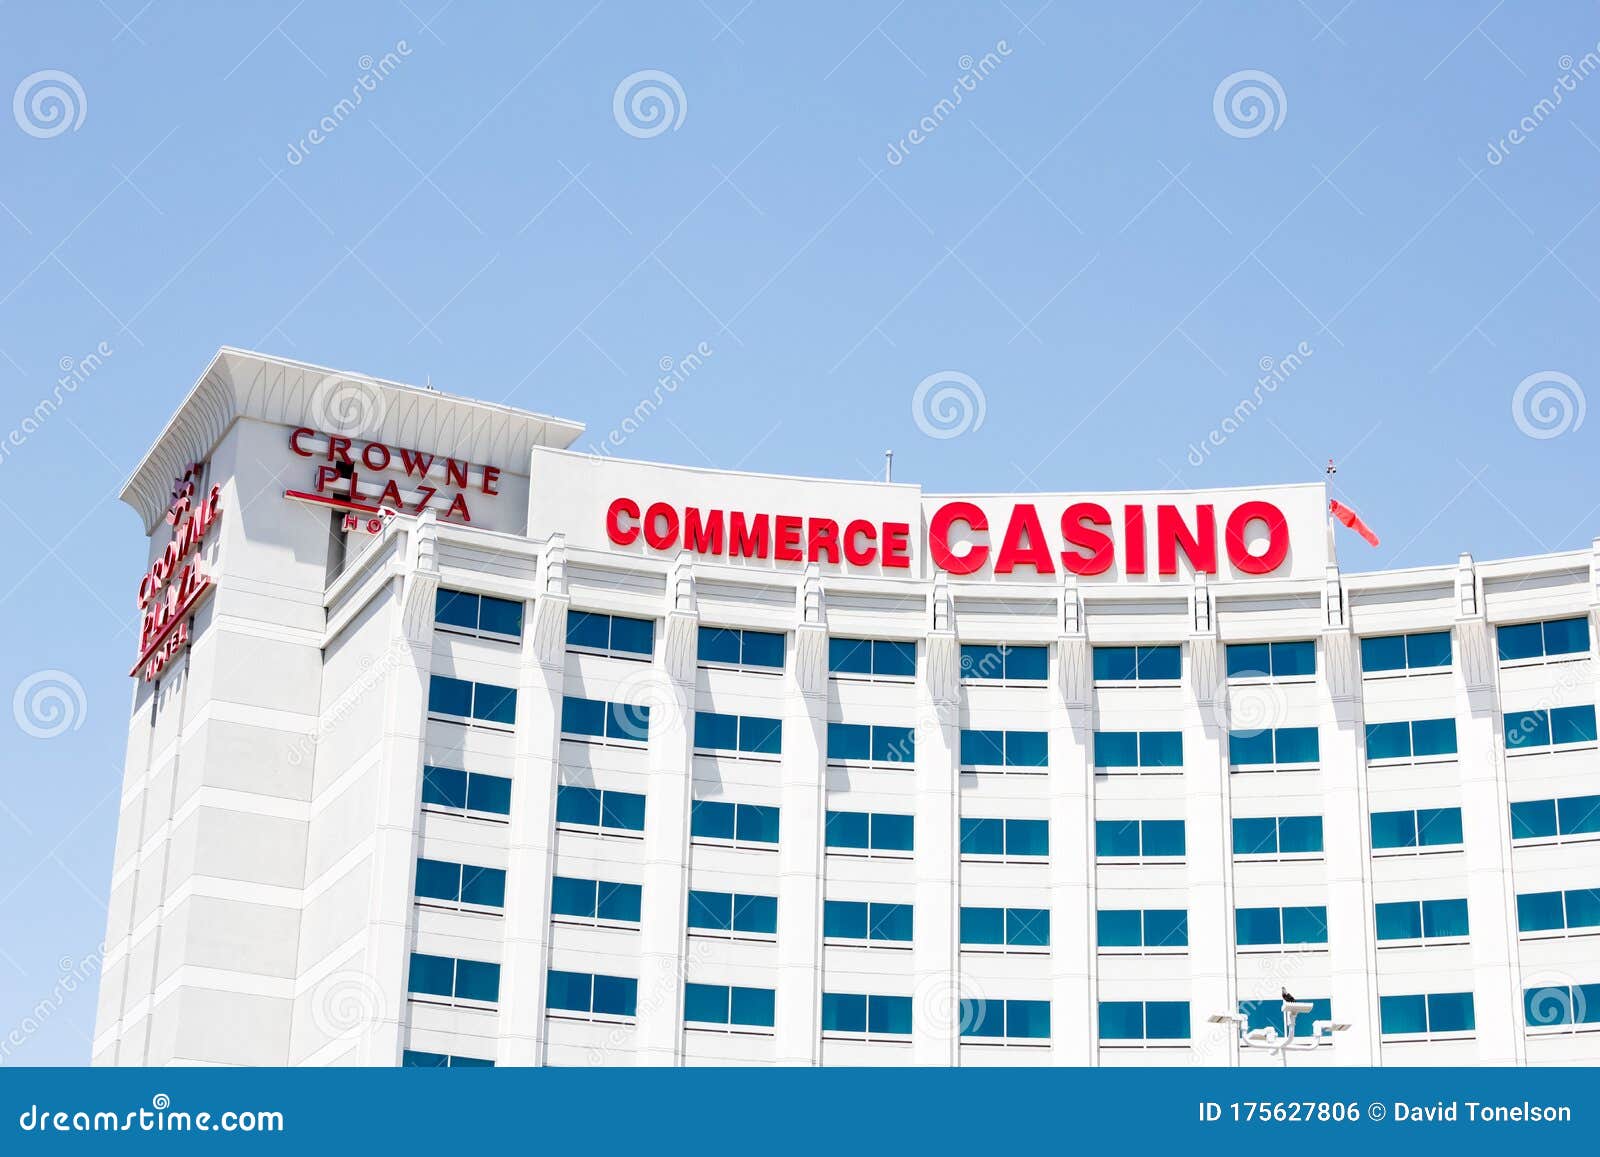 Sins Of casino